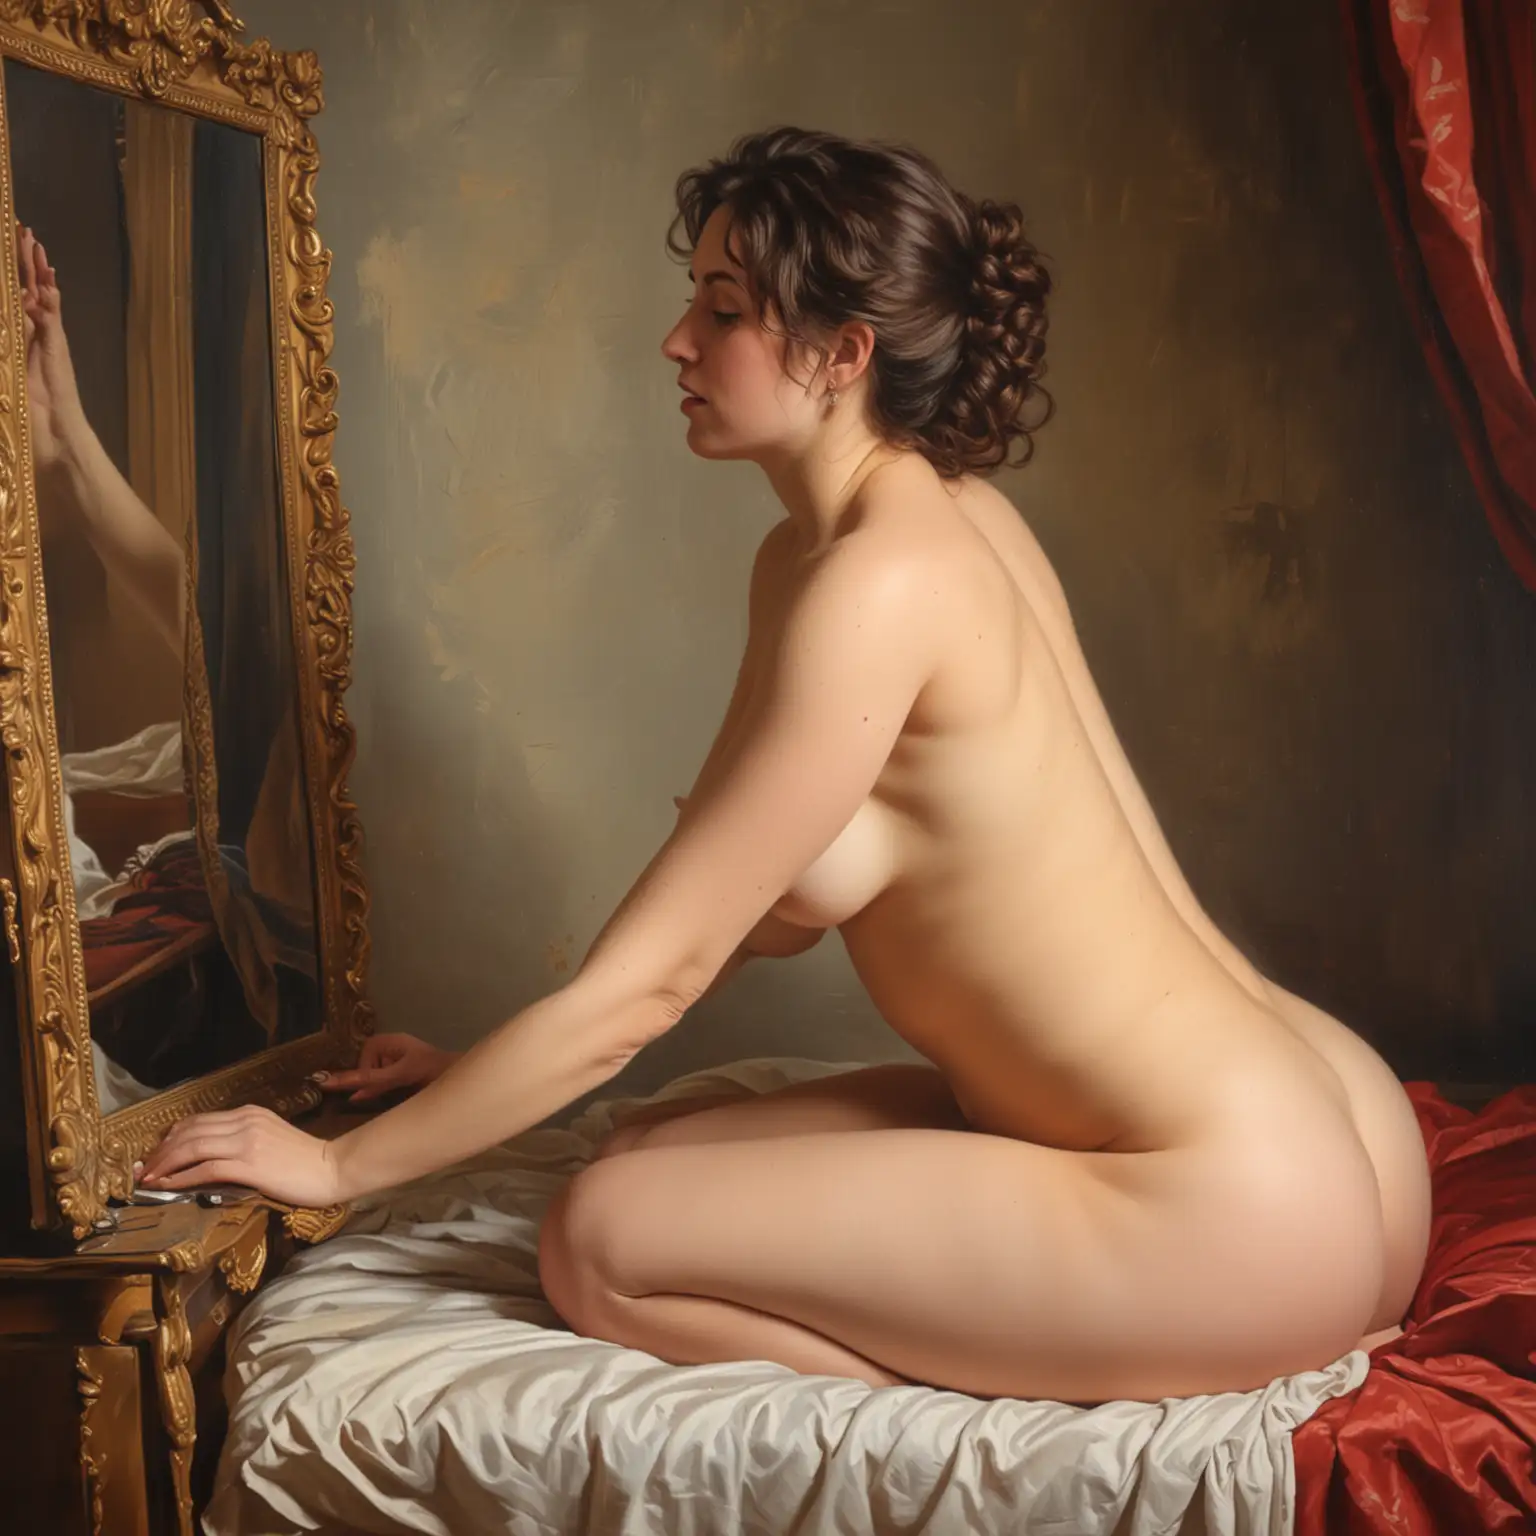 Nude Woman in Boudoir Sensual Portrait Inspired by Tissien